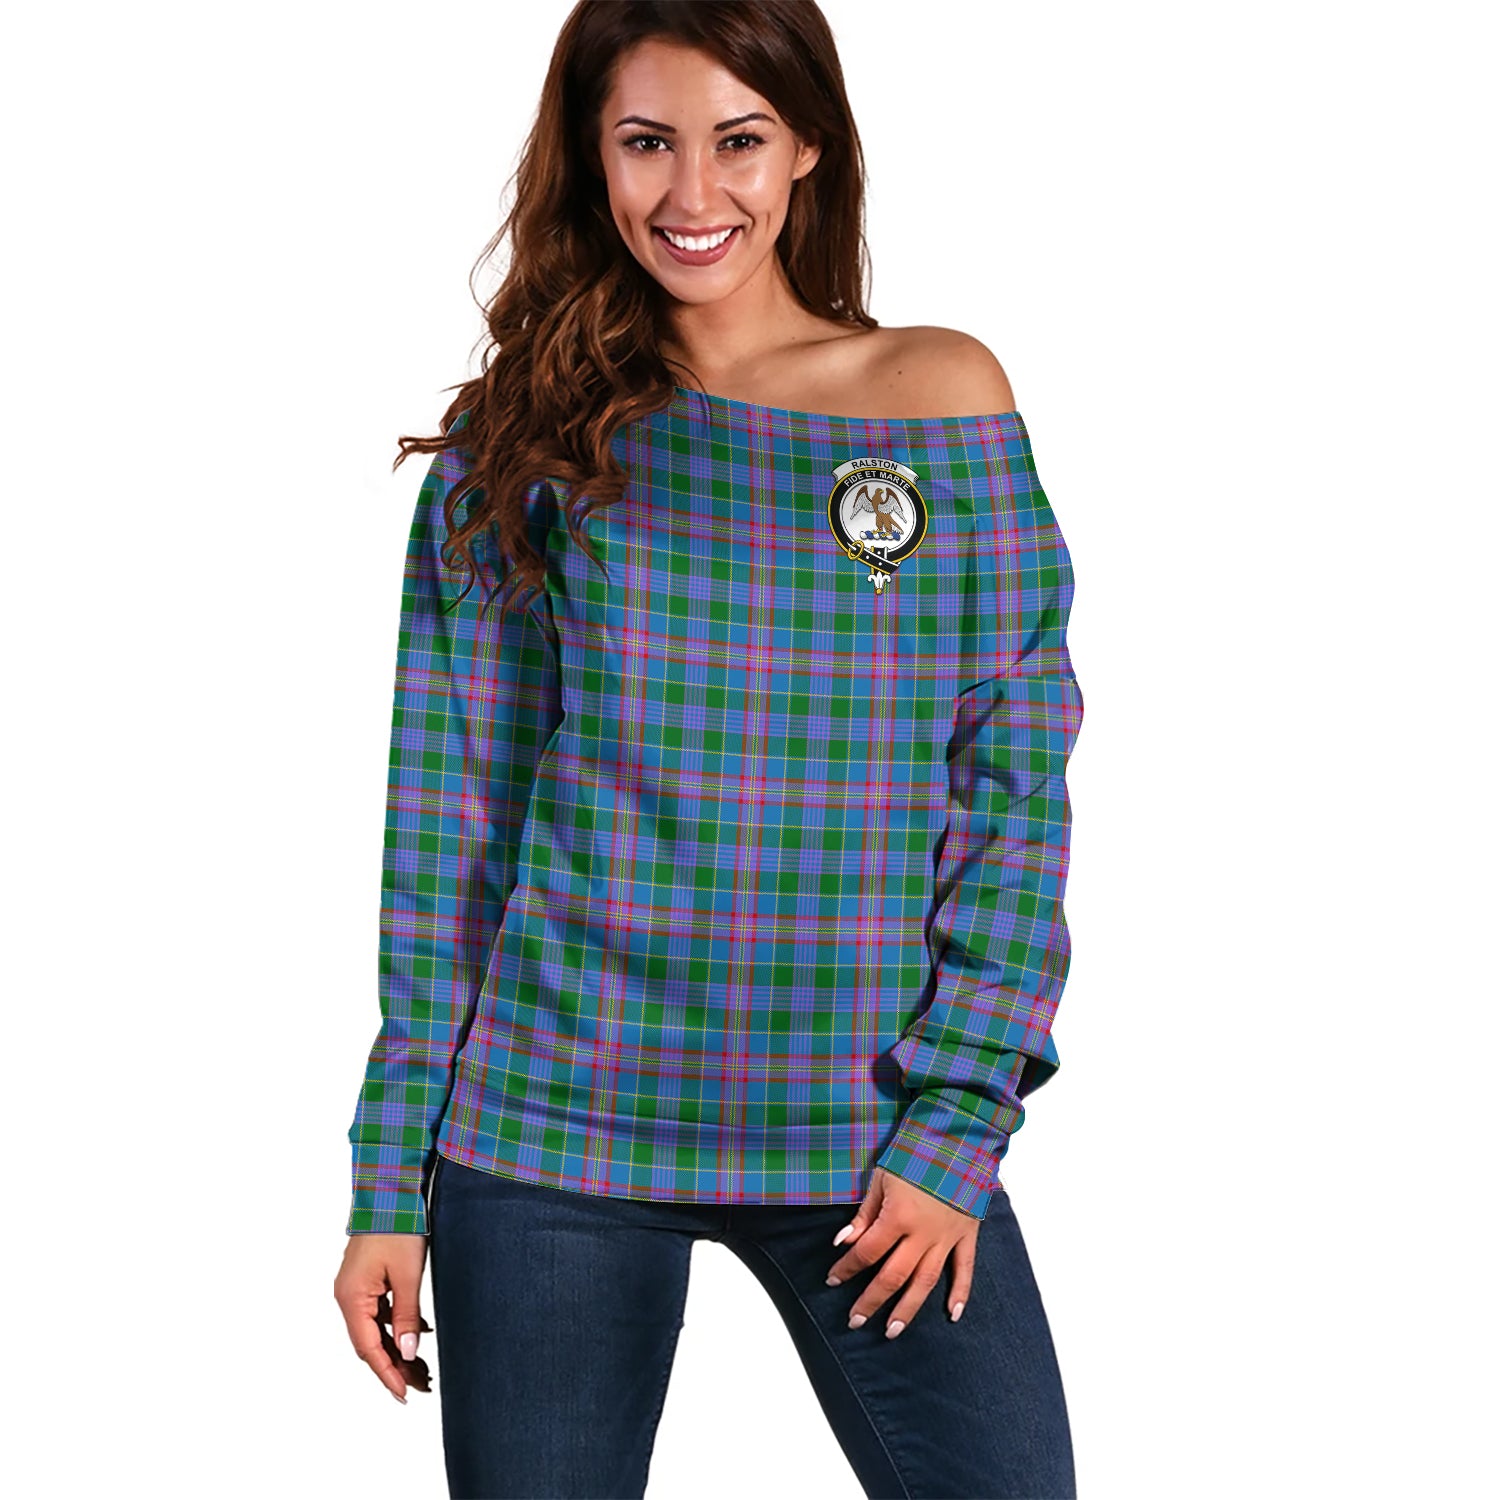 ralston-clan-tartan-off-shoulder-sweater-family-crest-sweater-for-women